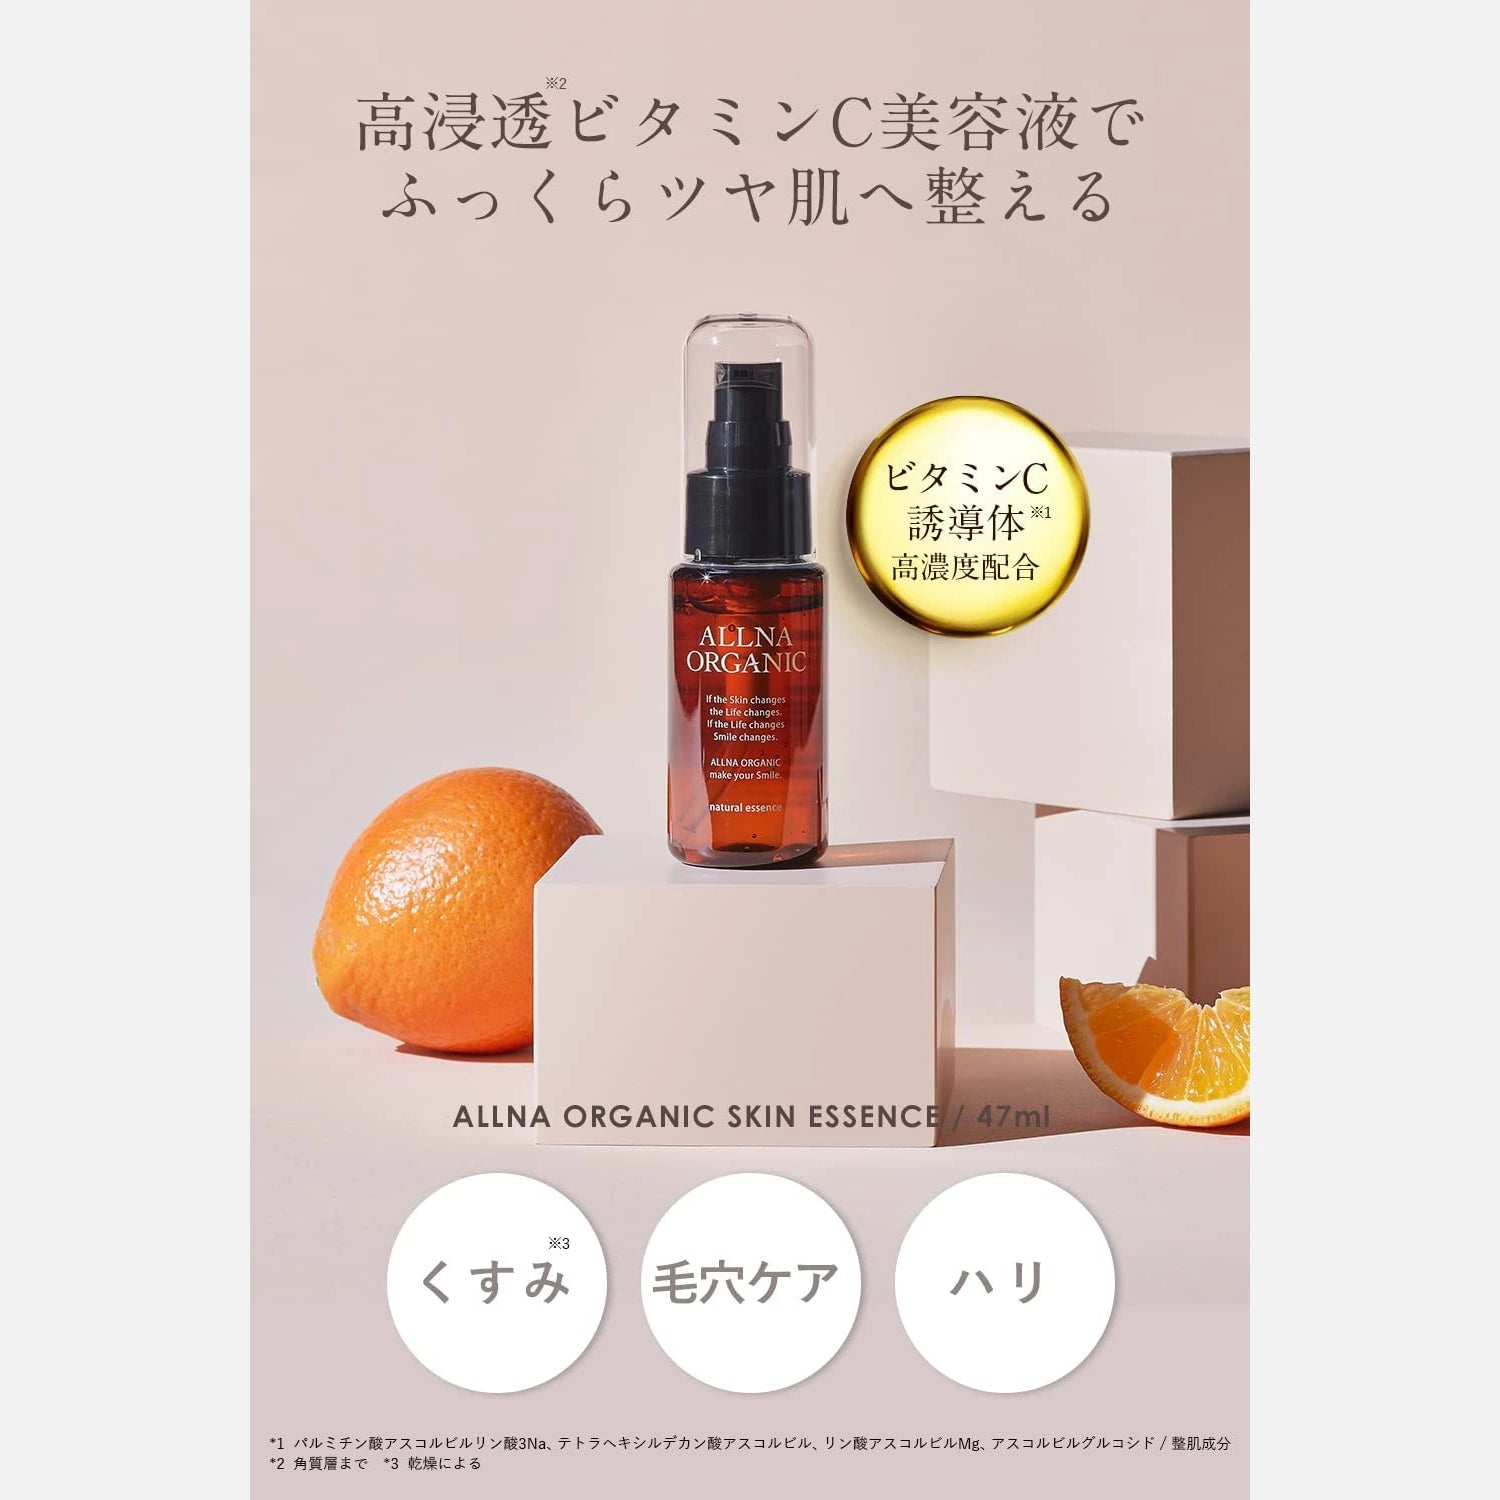 Allna Organic Natural Essence Skin Serum 47ml - Buy Me Japan